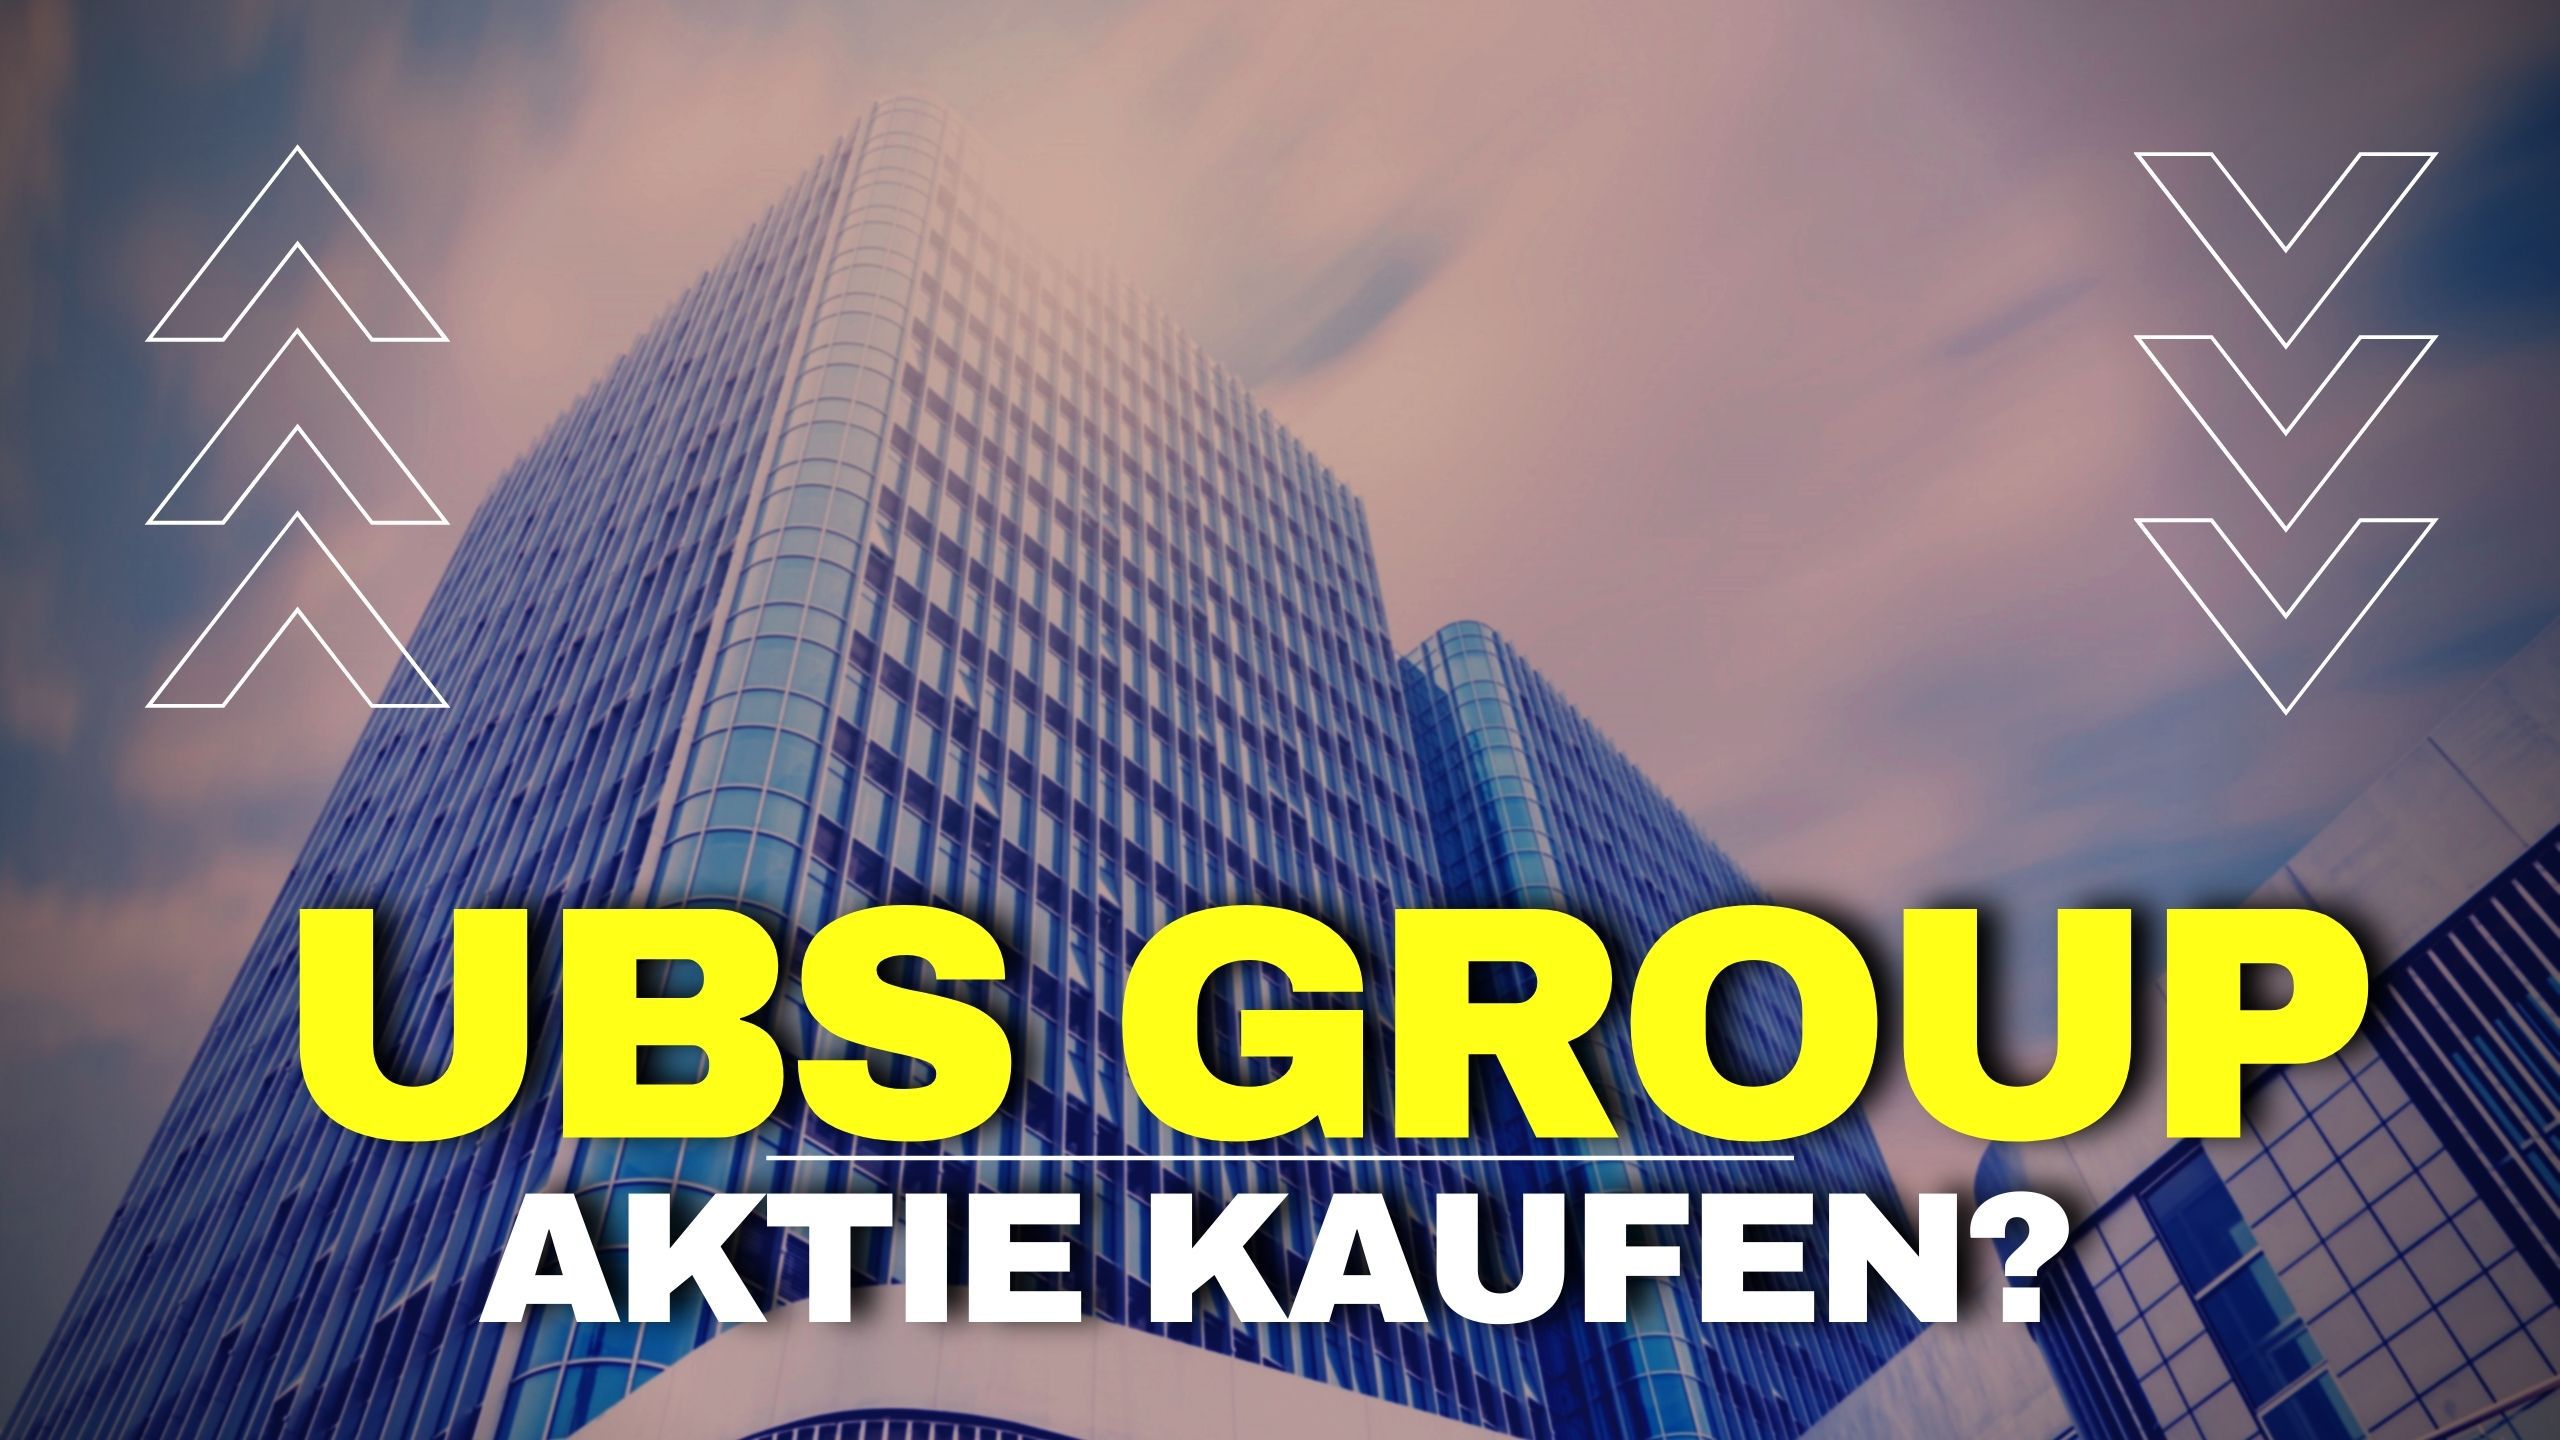 UBS Aktie kaufen? Infos, News, Analyse, Prognose & Kurziel